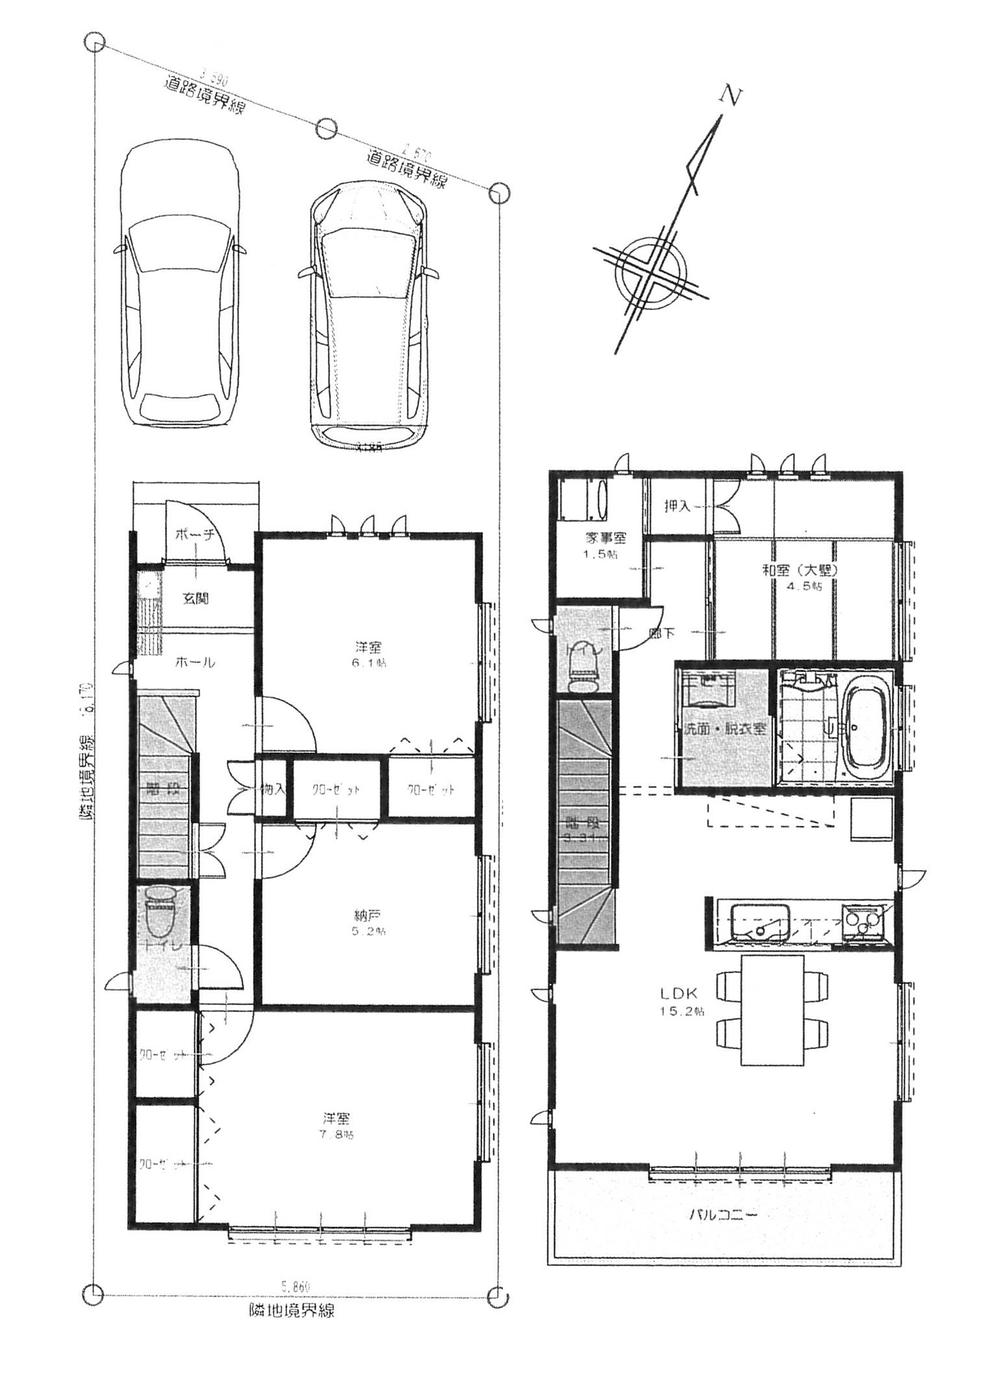 Building plan example (floor plan). Building plan Example (3) 3LDK + S, Land price 47,800,000 yen, Land area 100.1 sq m , Building price 16 million yen, Building area 99.33 sq m